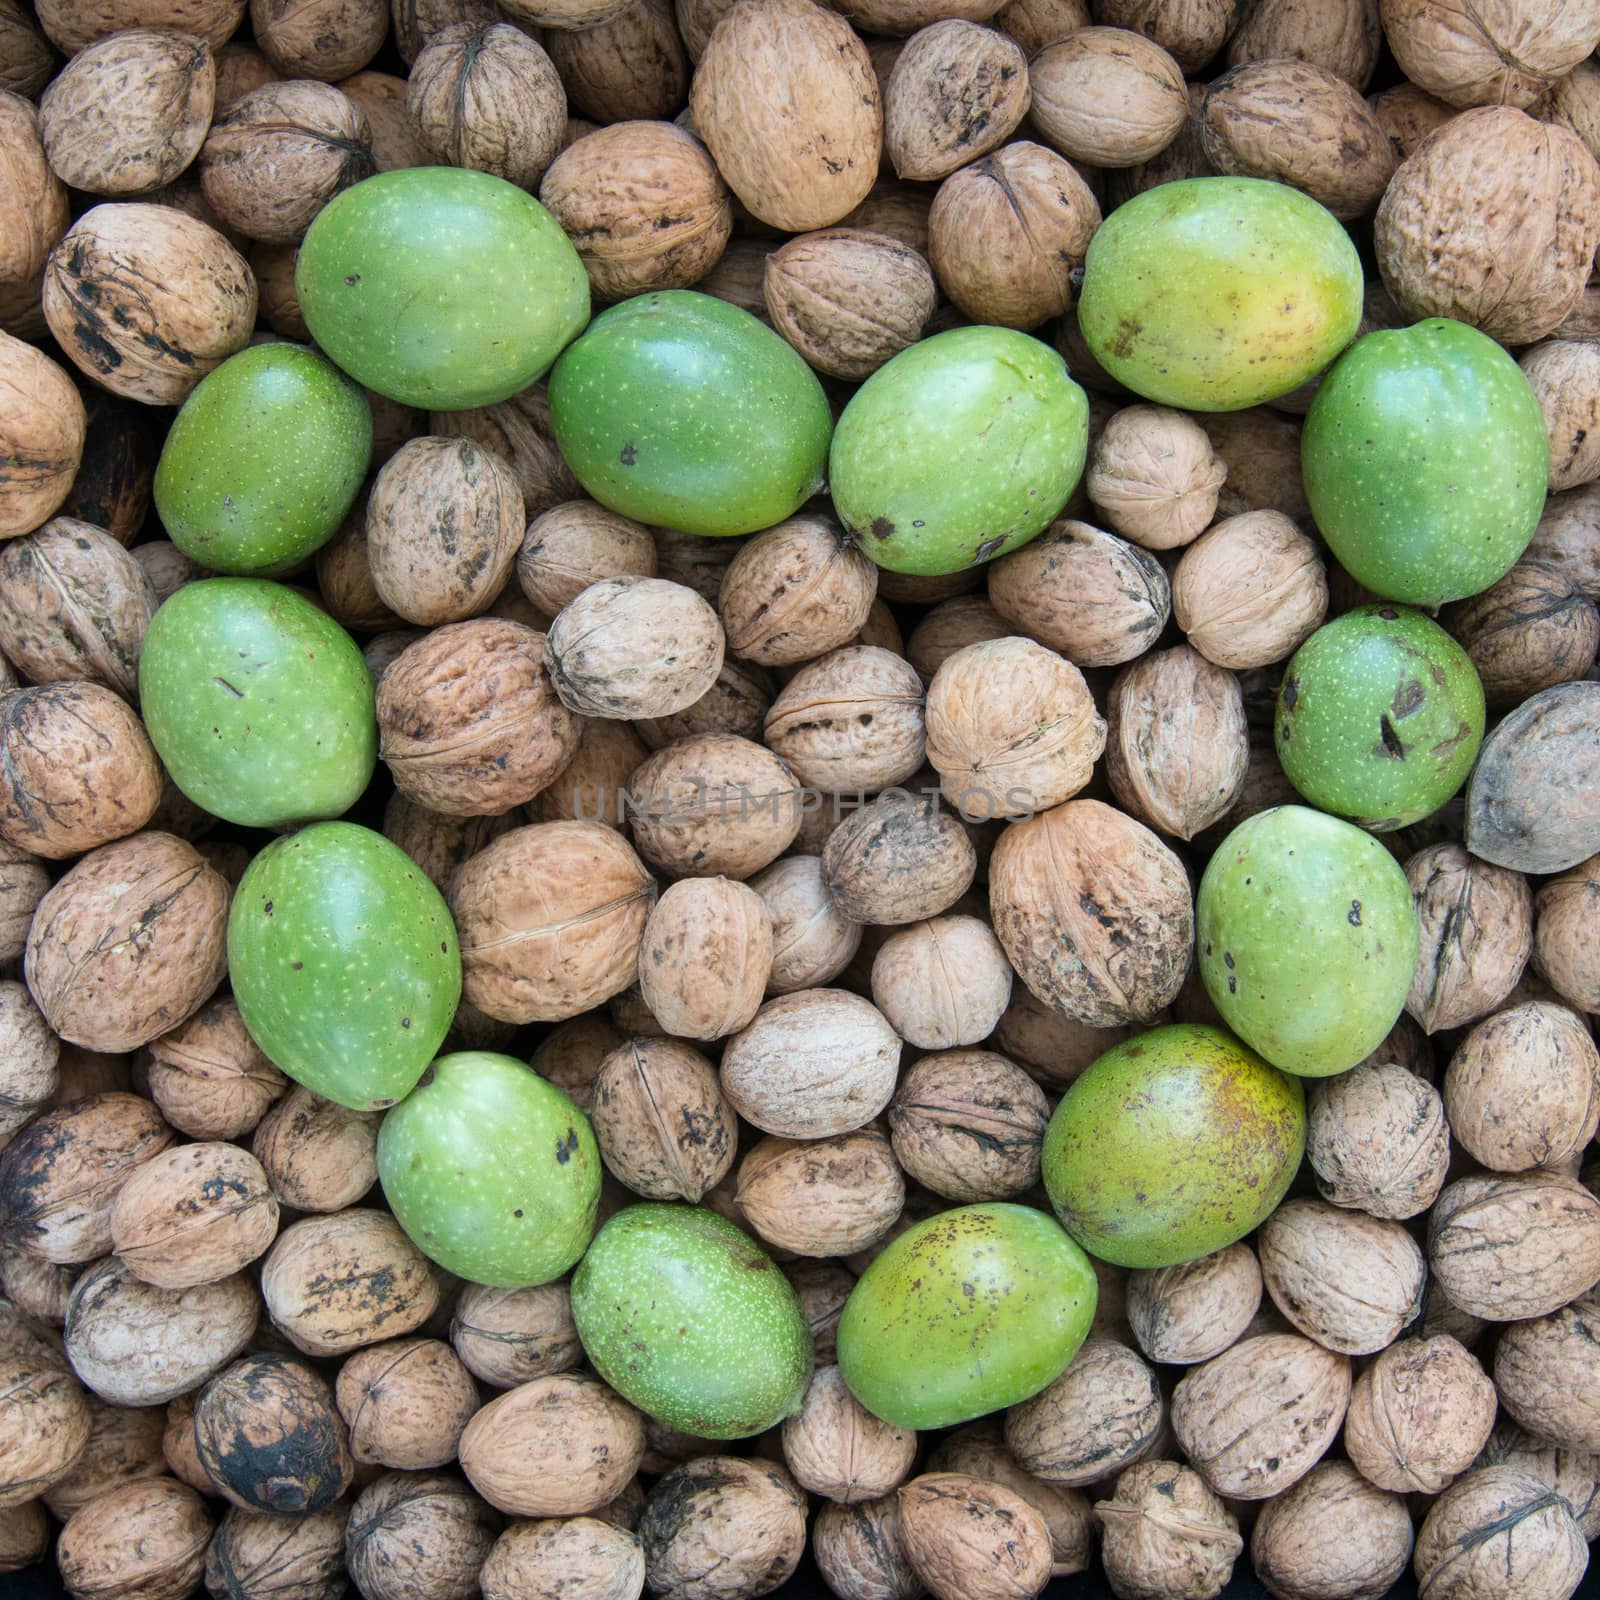 Ripe and unripe walnuts by Mibuch